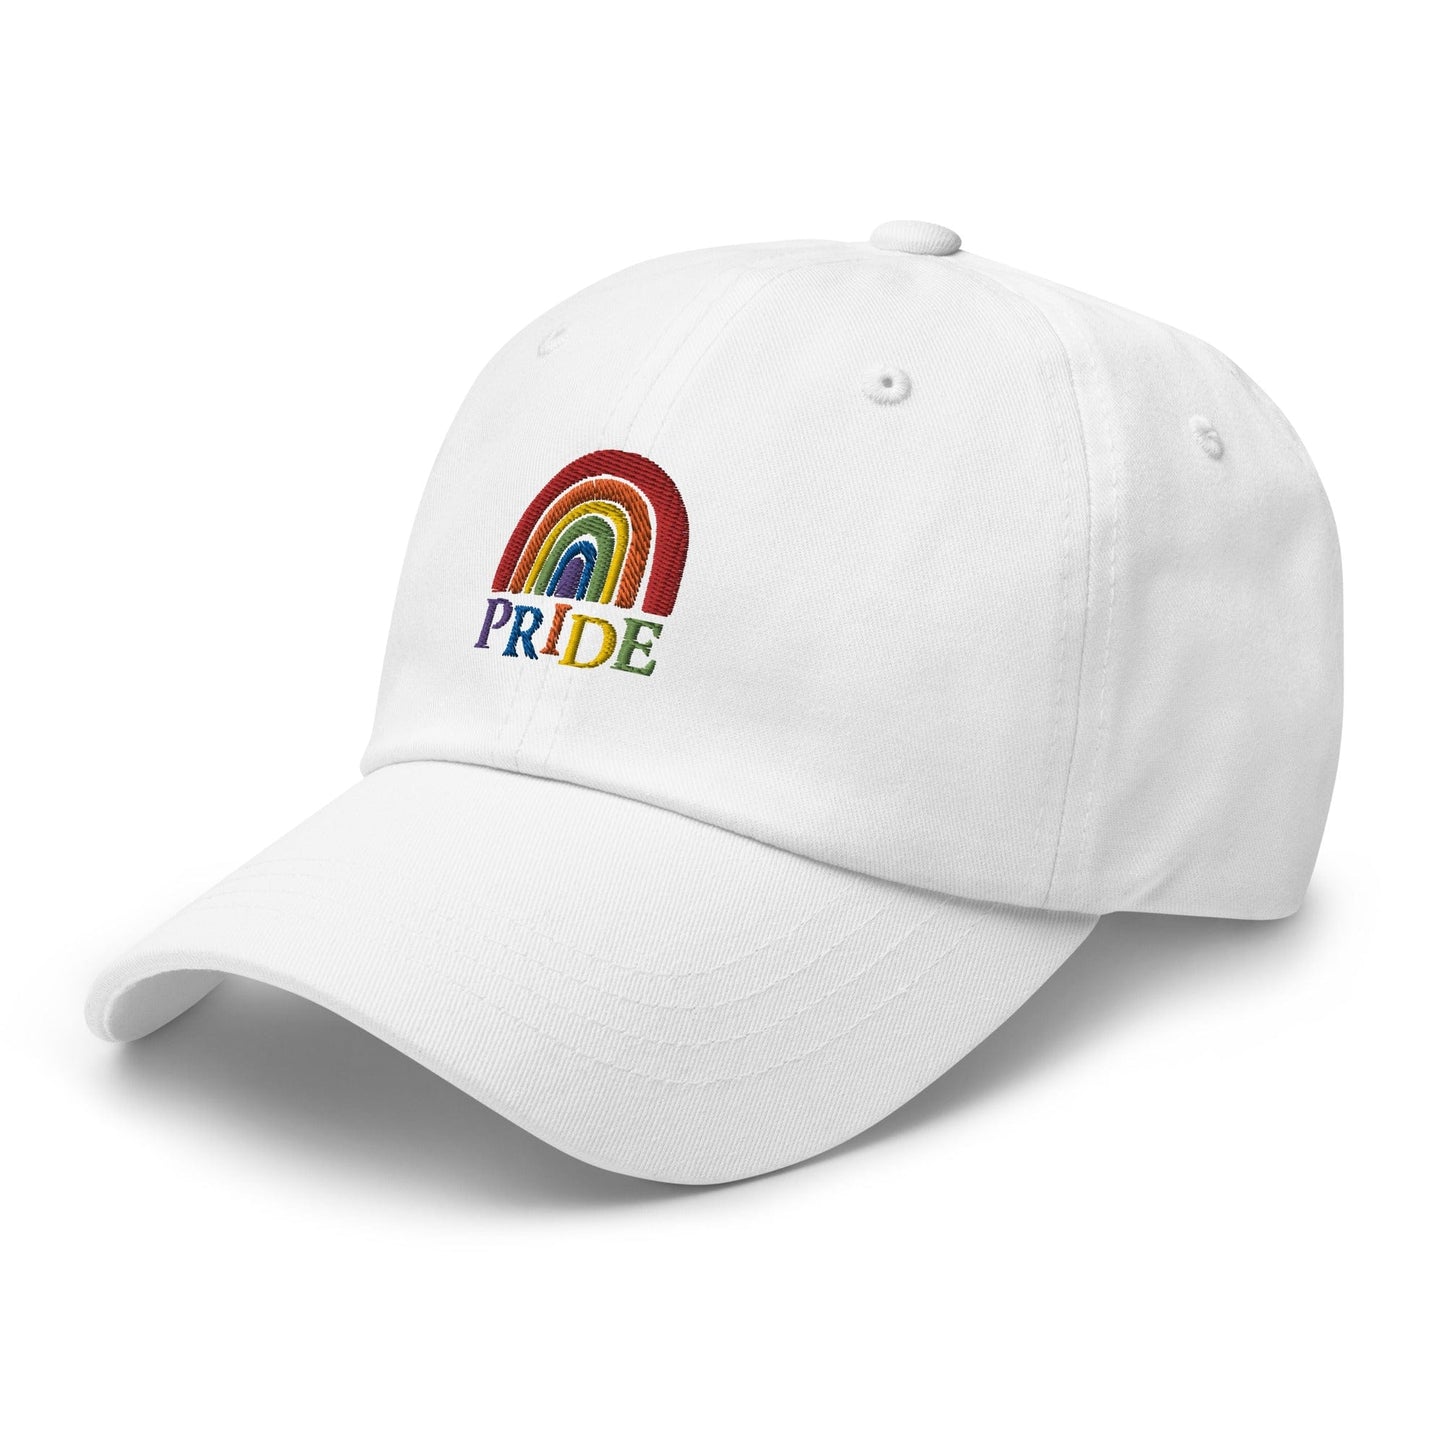 pride-dad-hat-white-left-front-